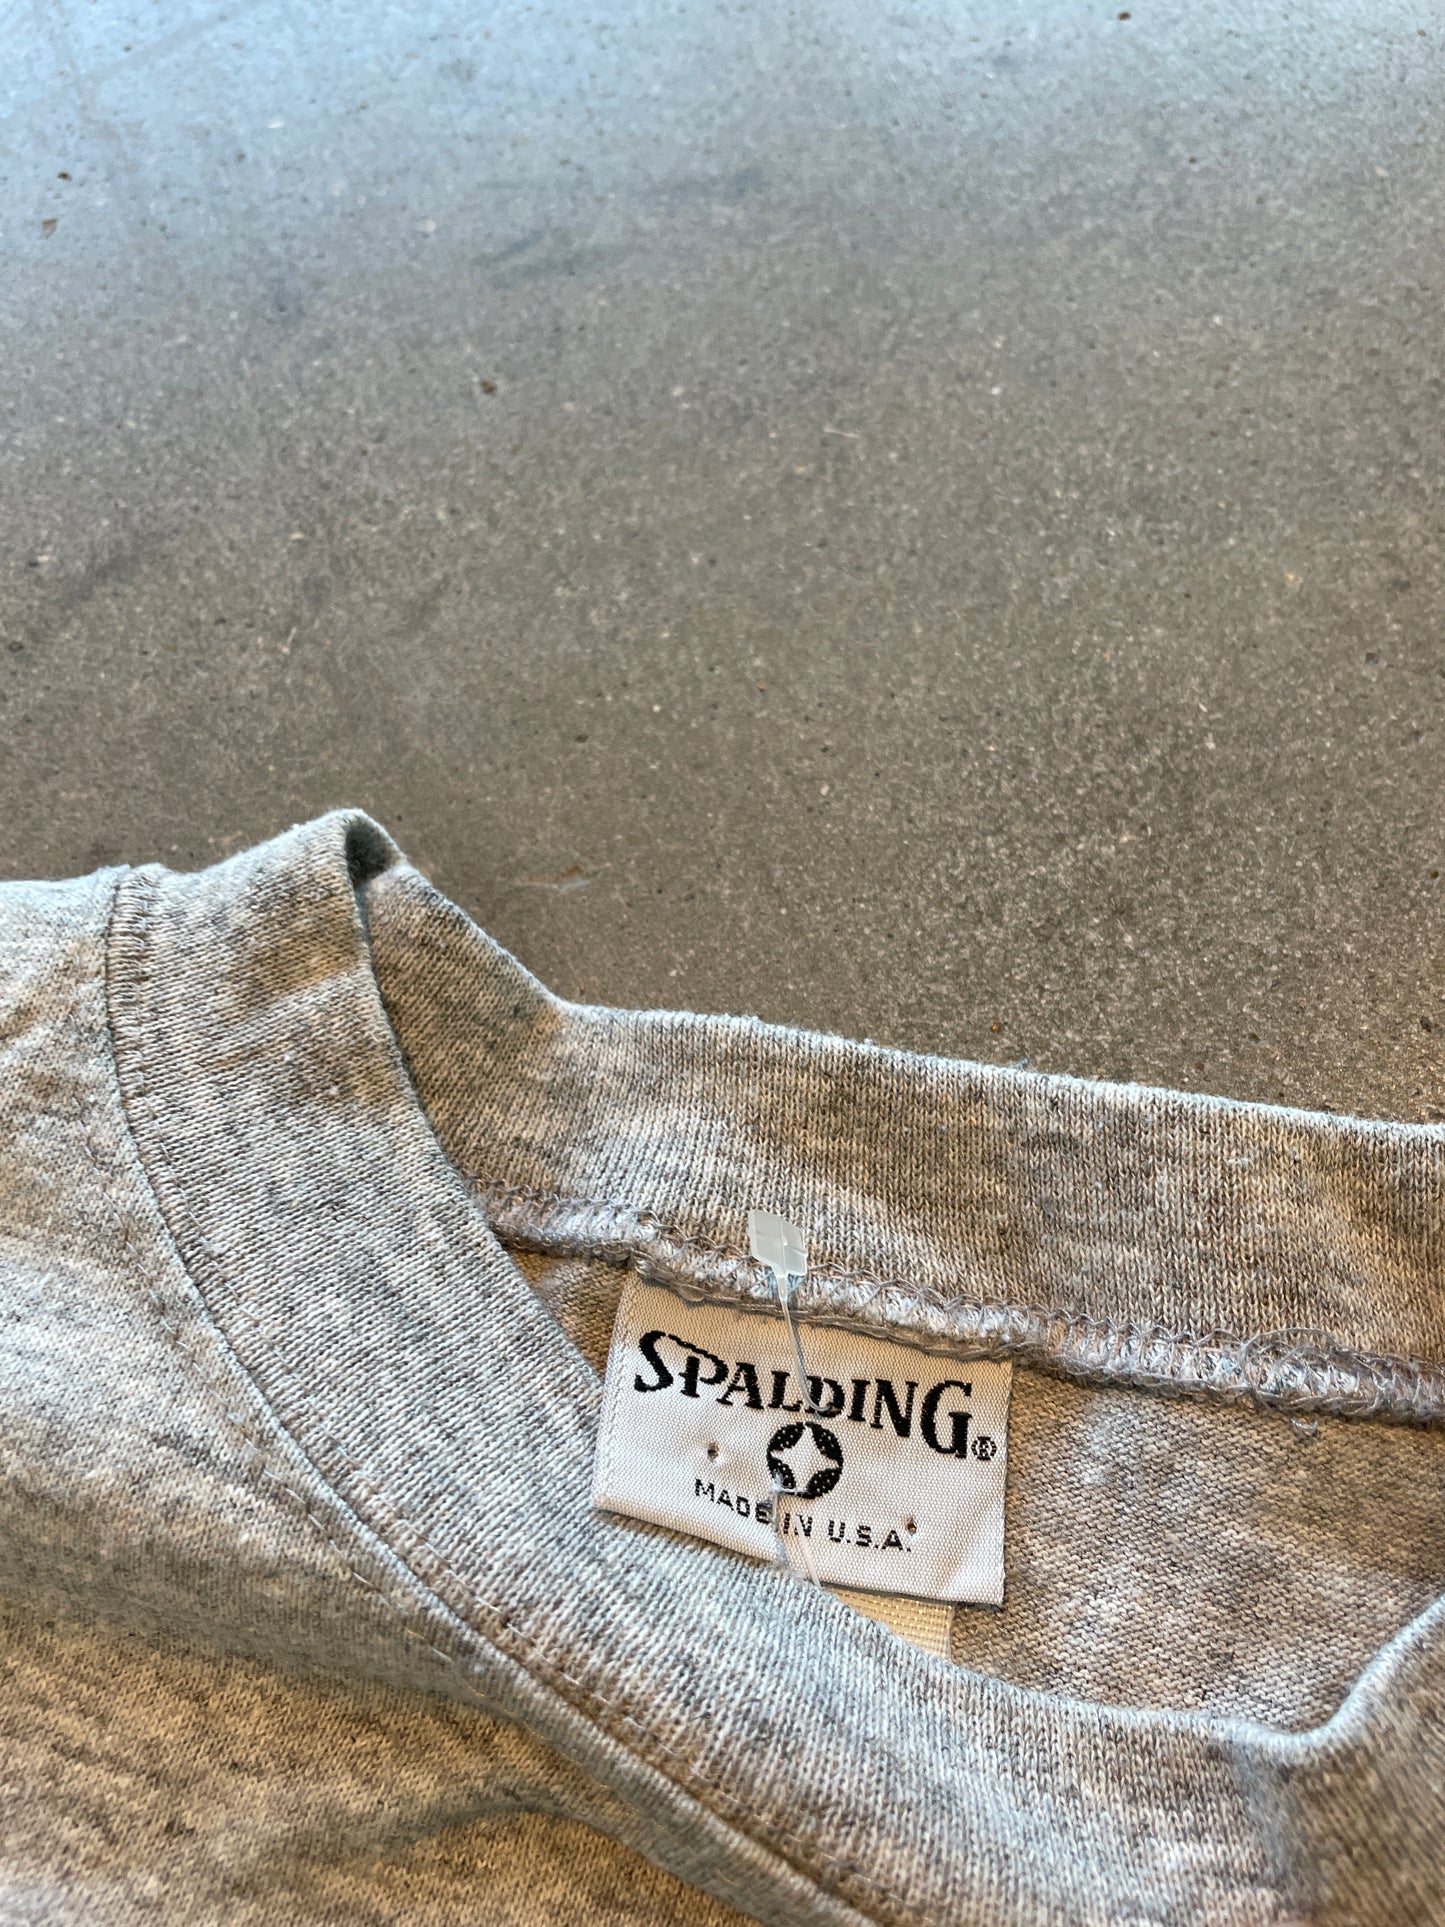 Spalding tee shirt - L